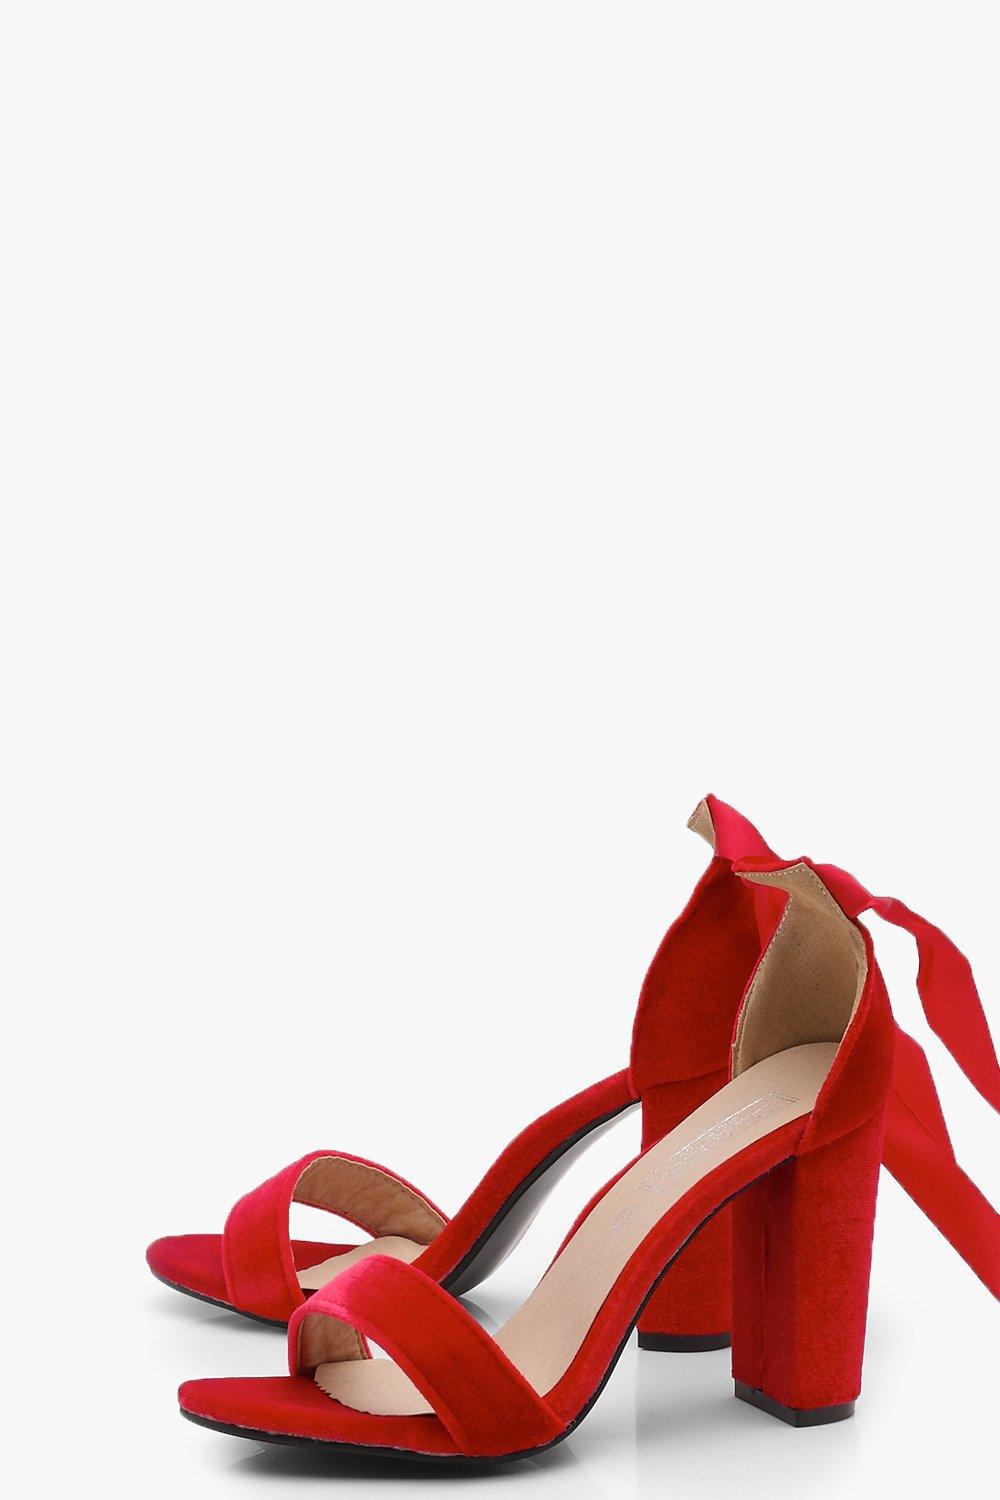 heels with ribbon ties